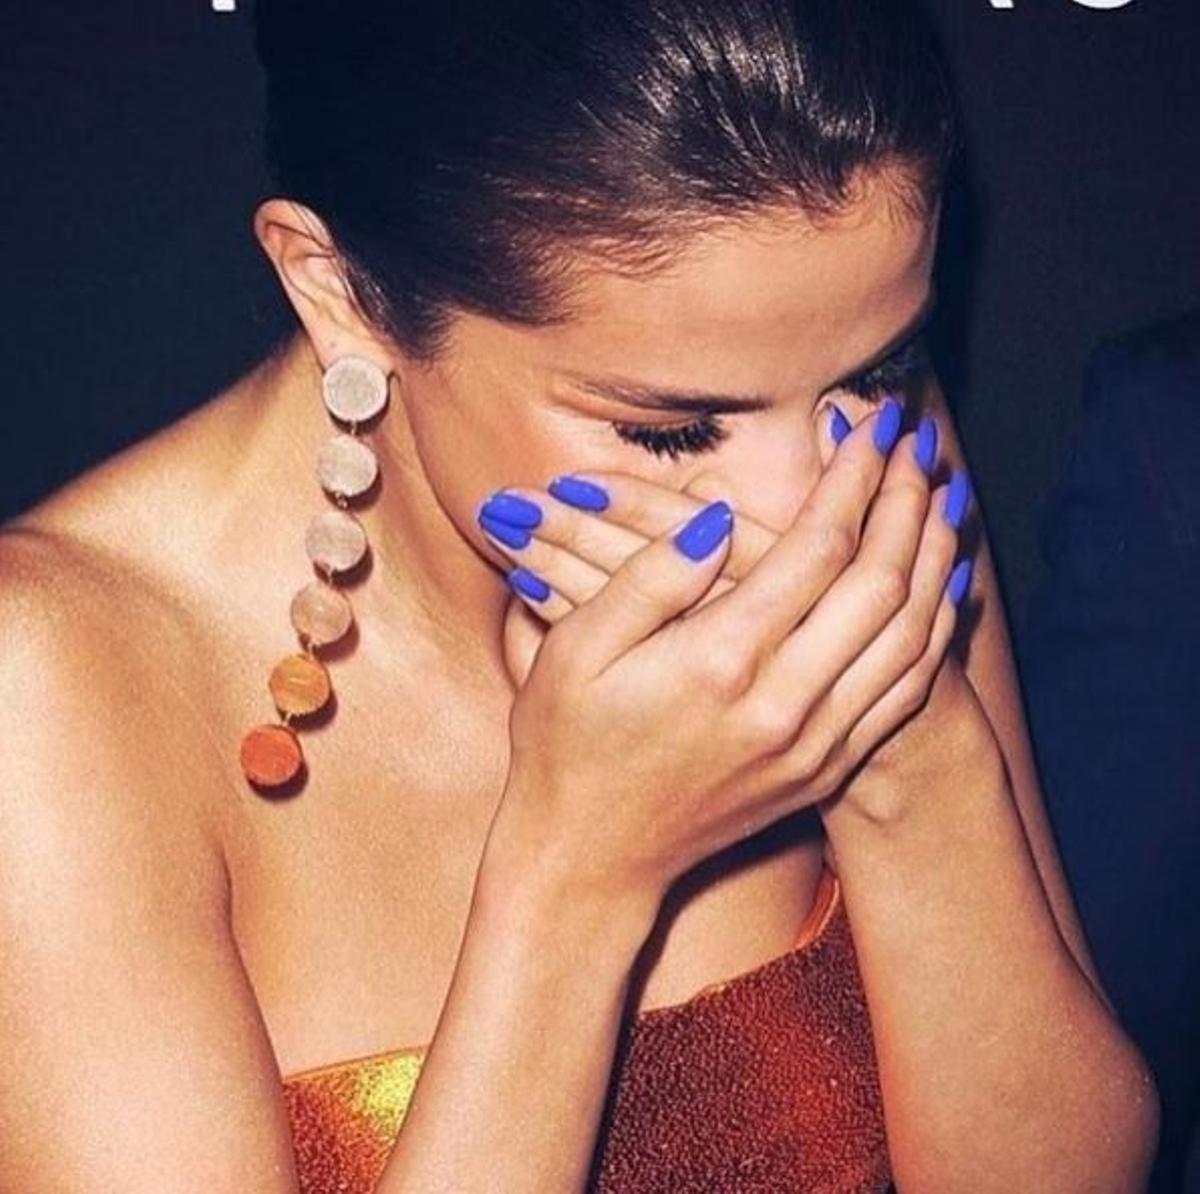 La manicura de 2€ de Selena Gomez